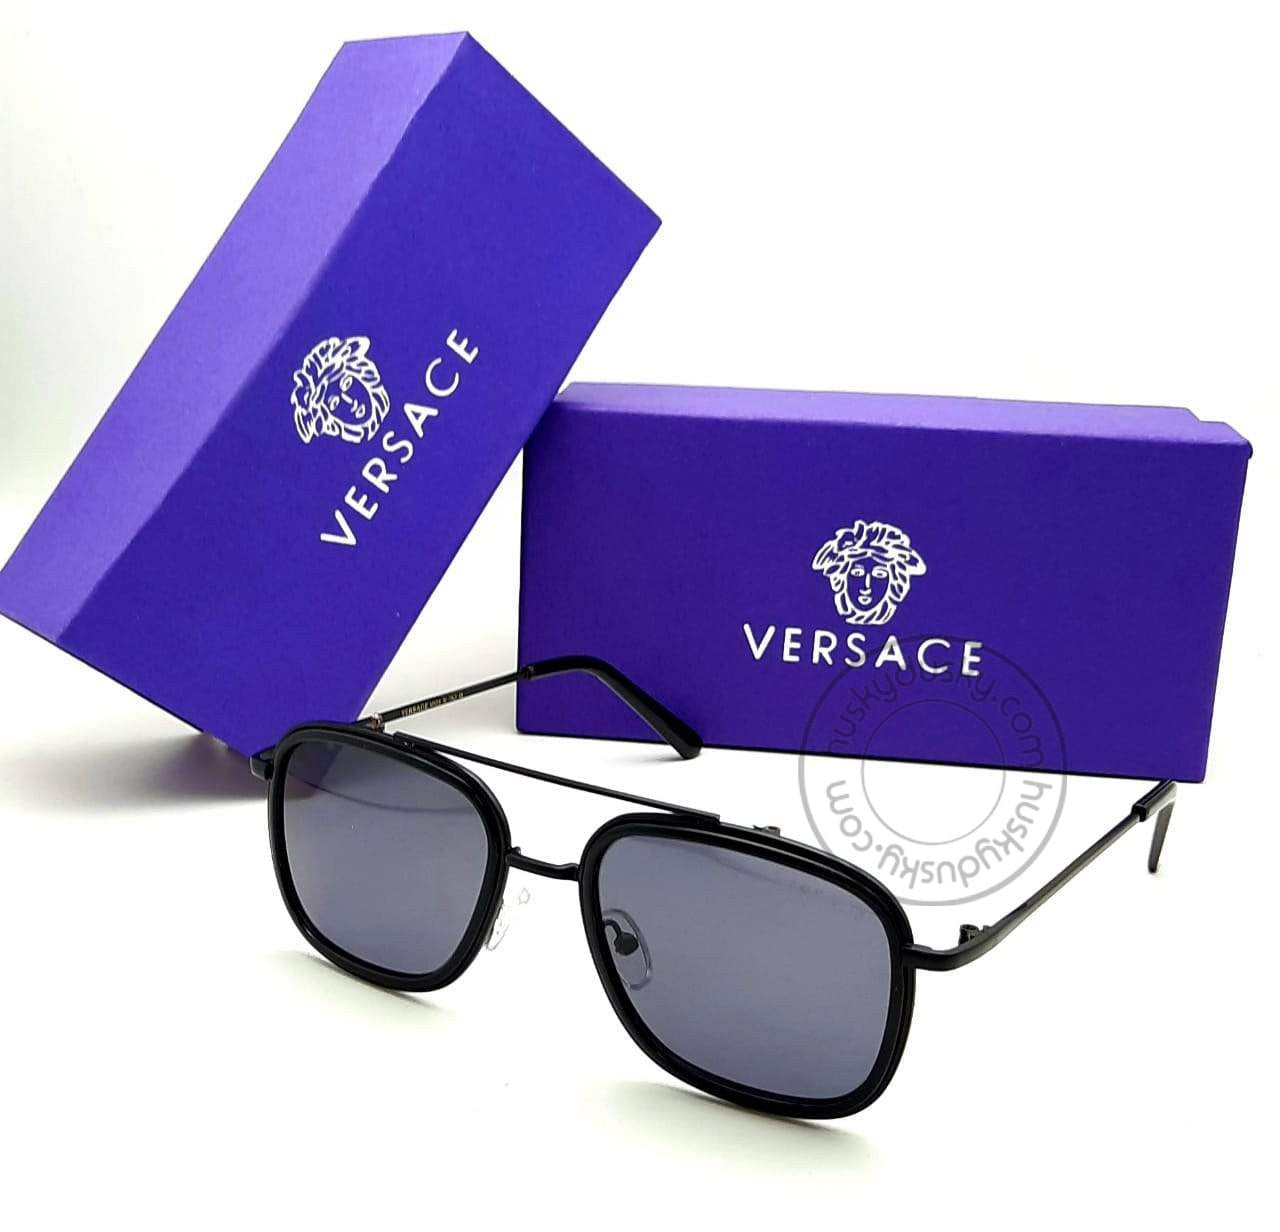 Versace Branded Black Glass Men's Sunglass For Man VER-25624 Black Frame Gift Sunglass